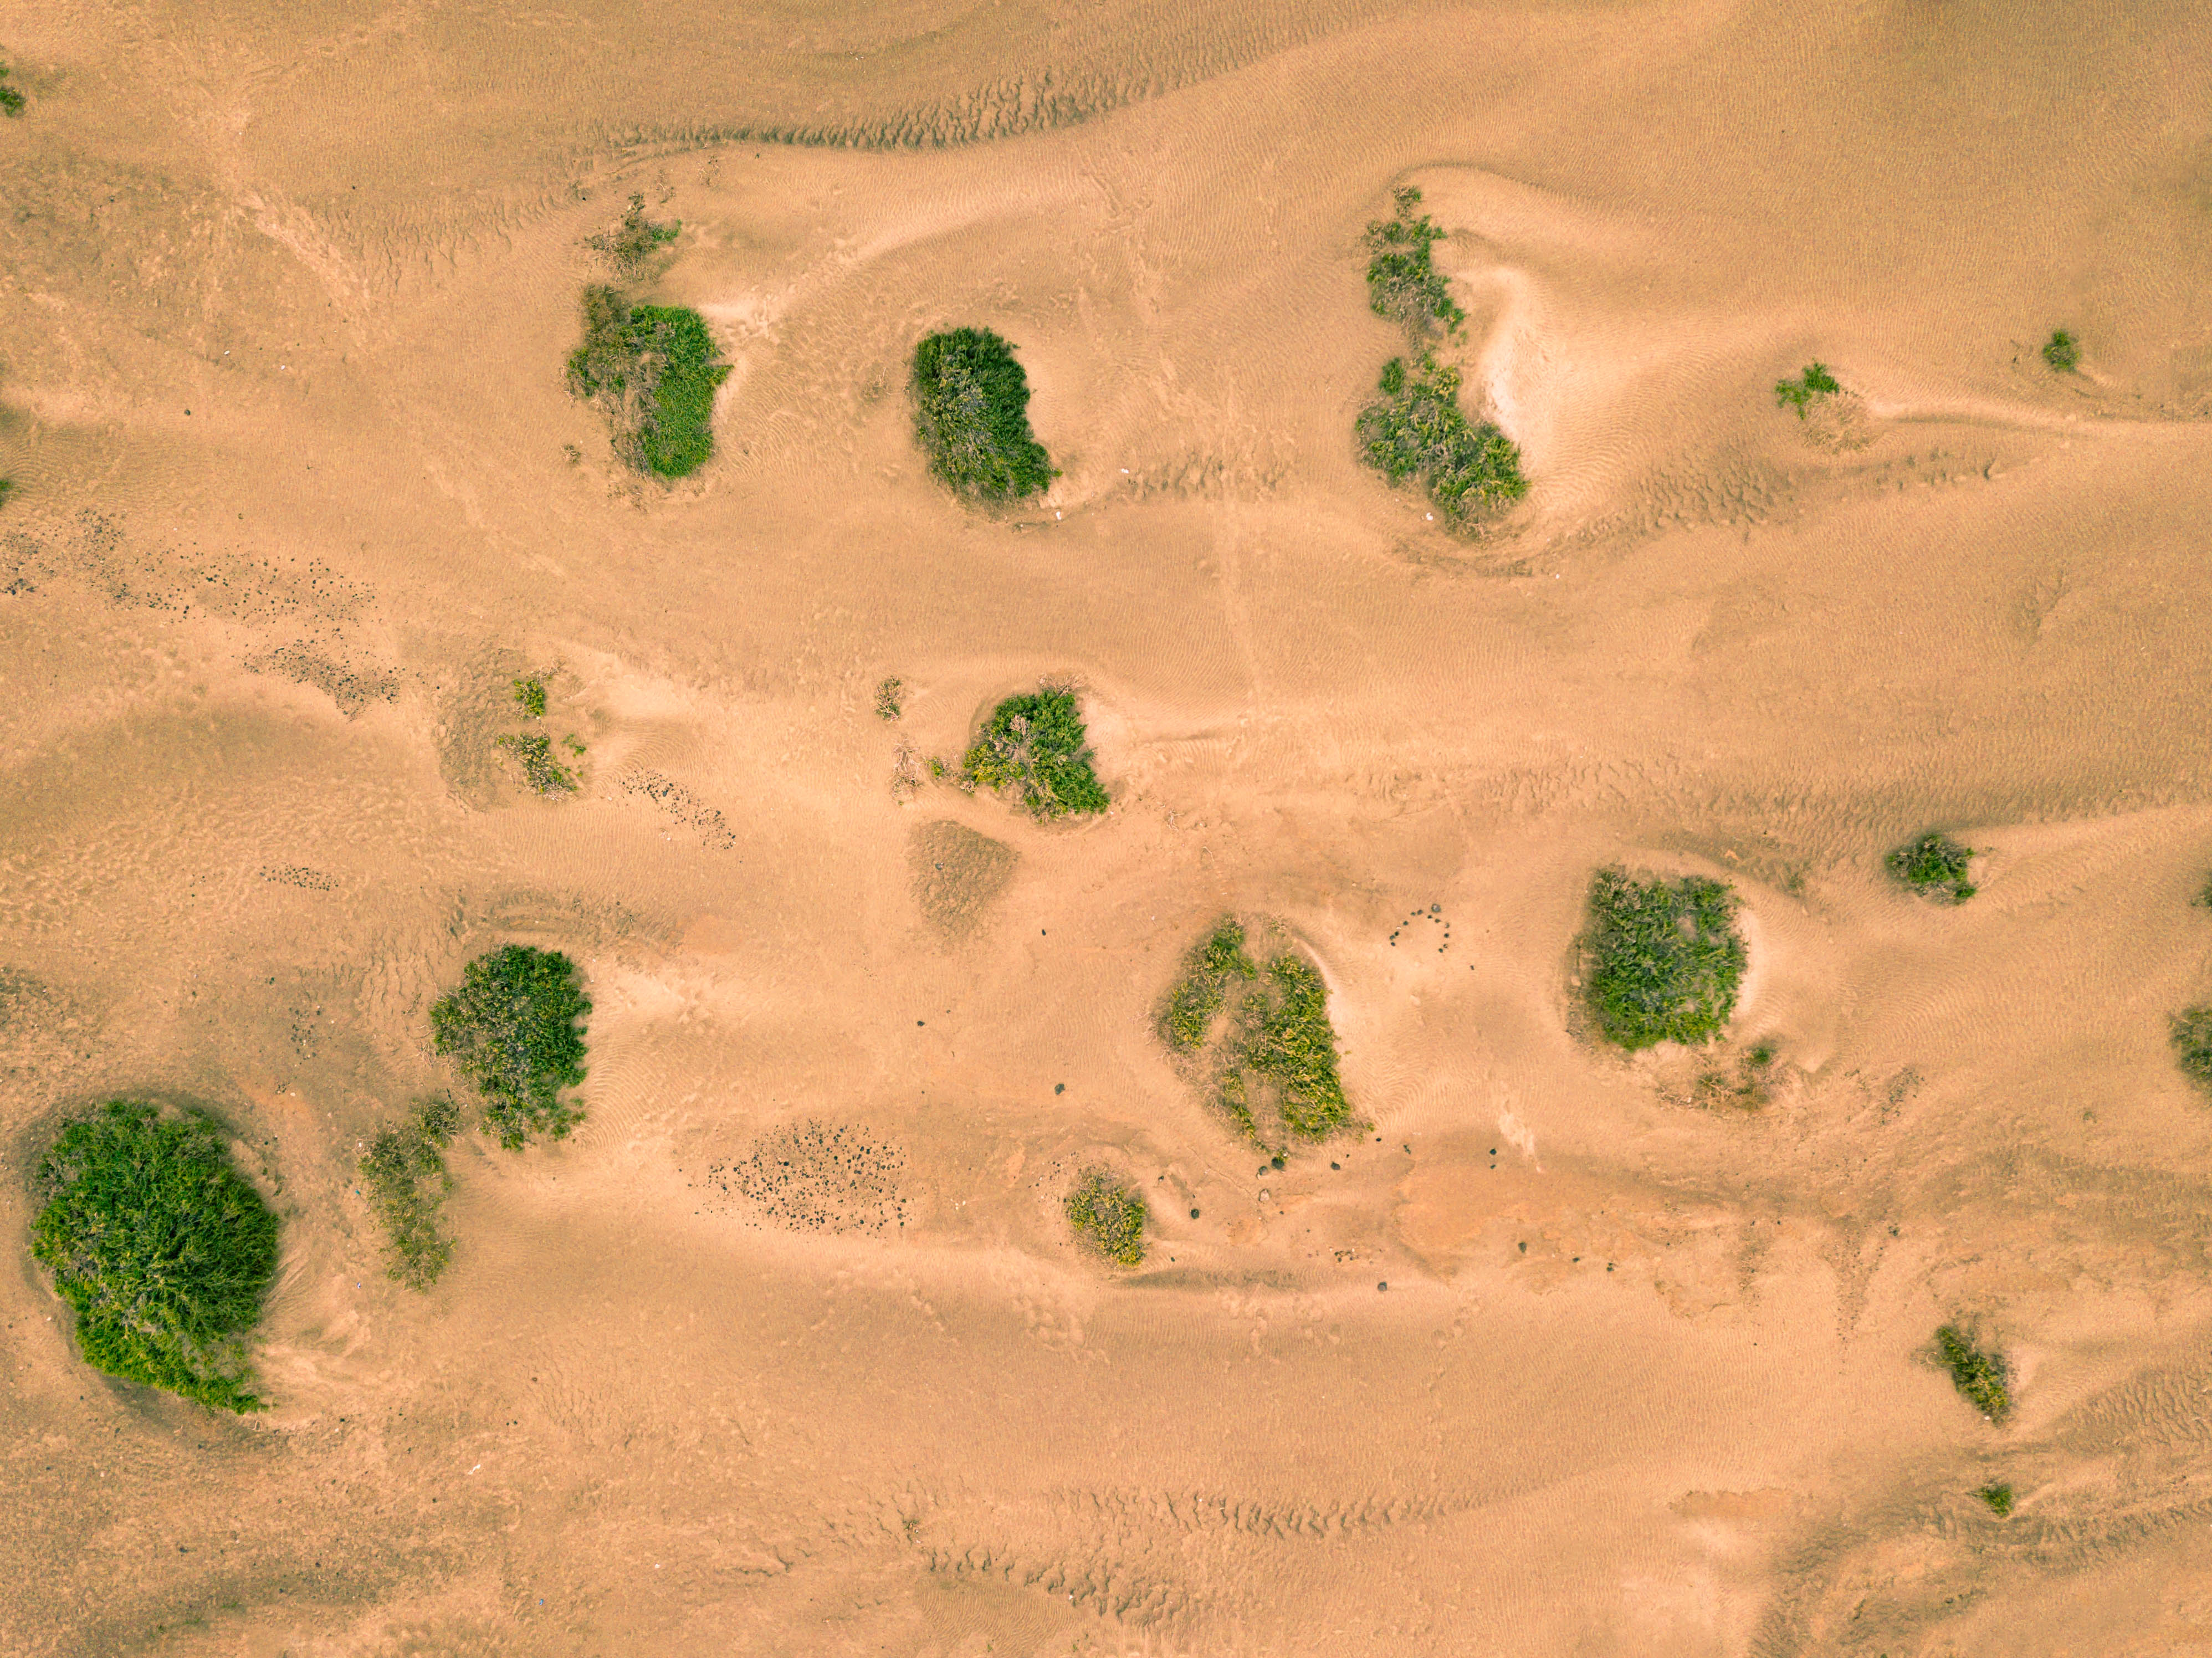 dunes, nature, sand, desert, vegetation, links images